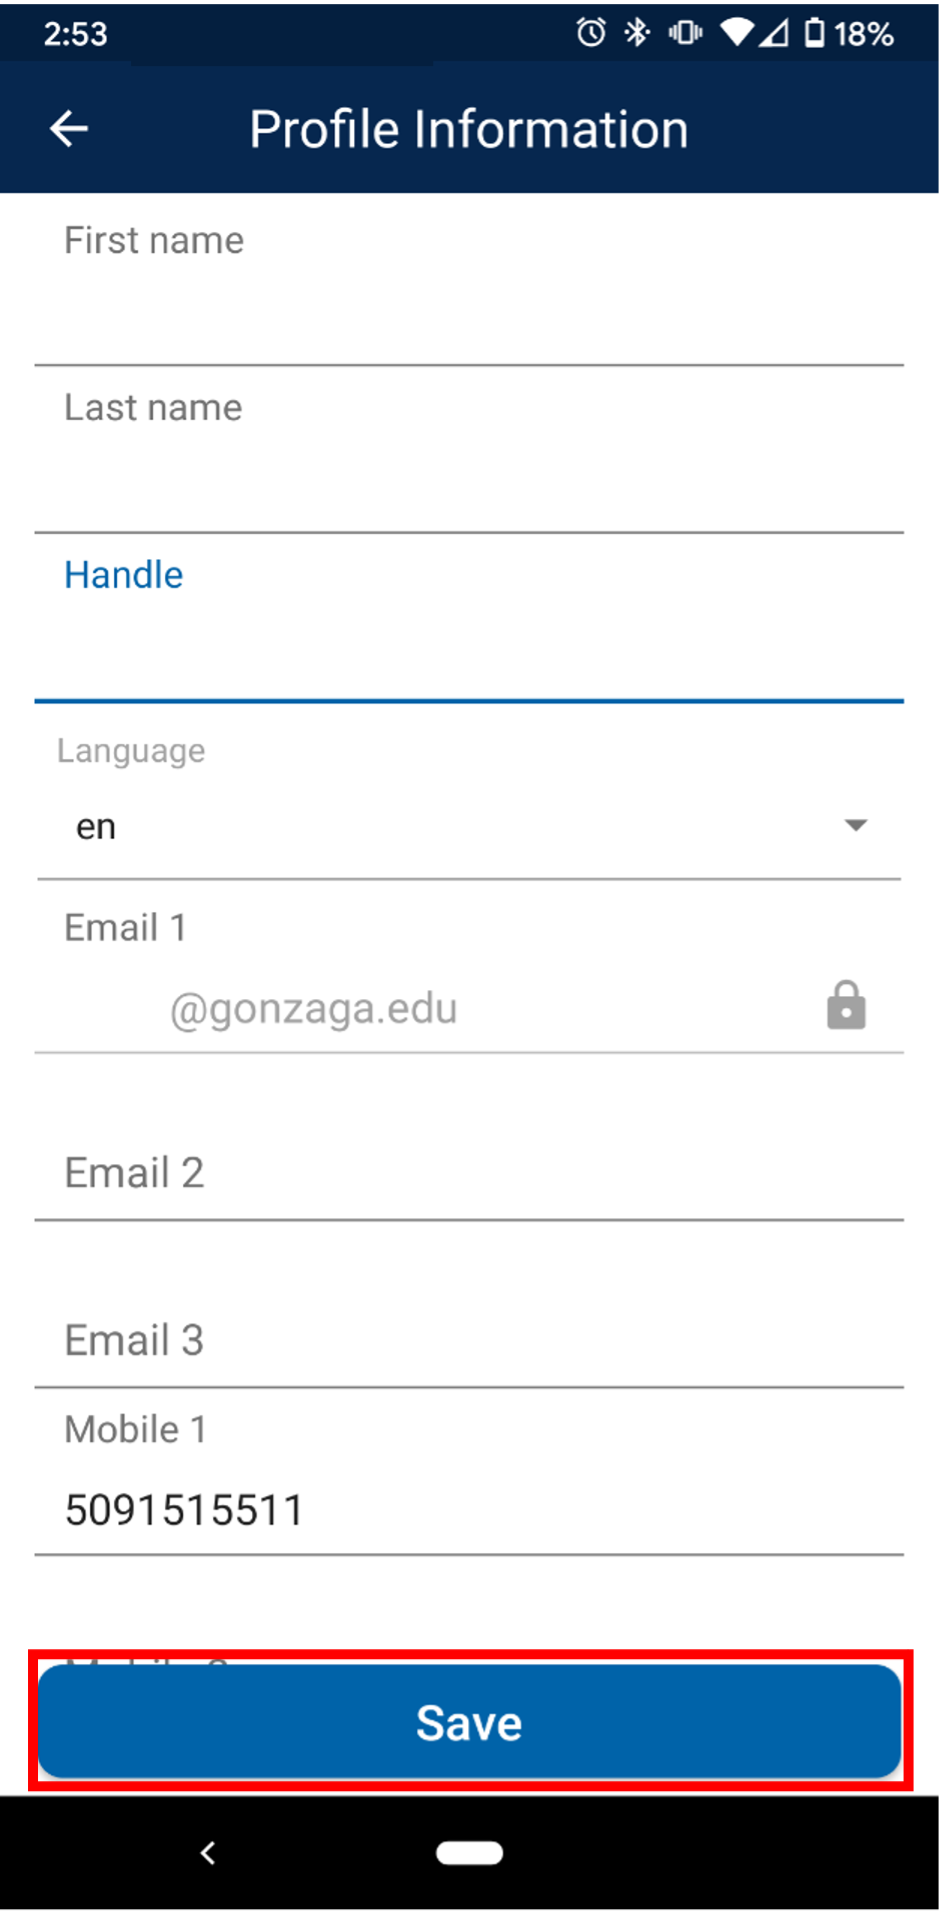 Guardian save profile information screen